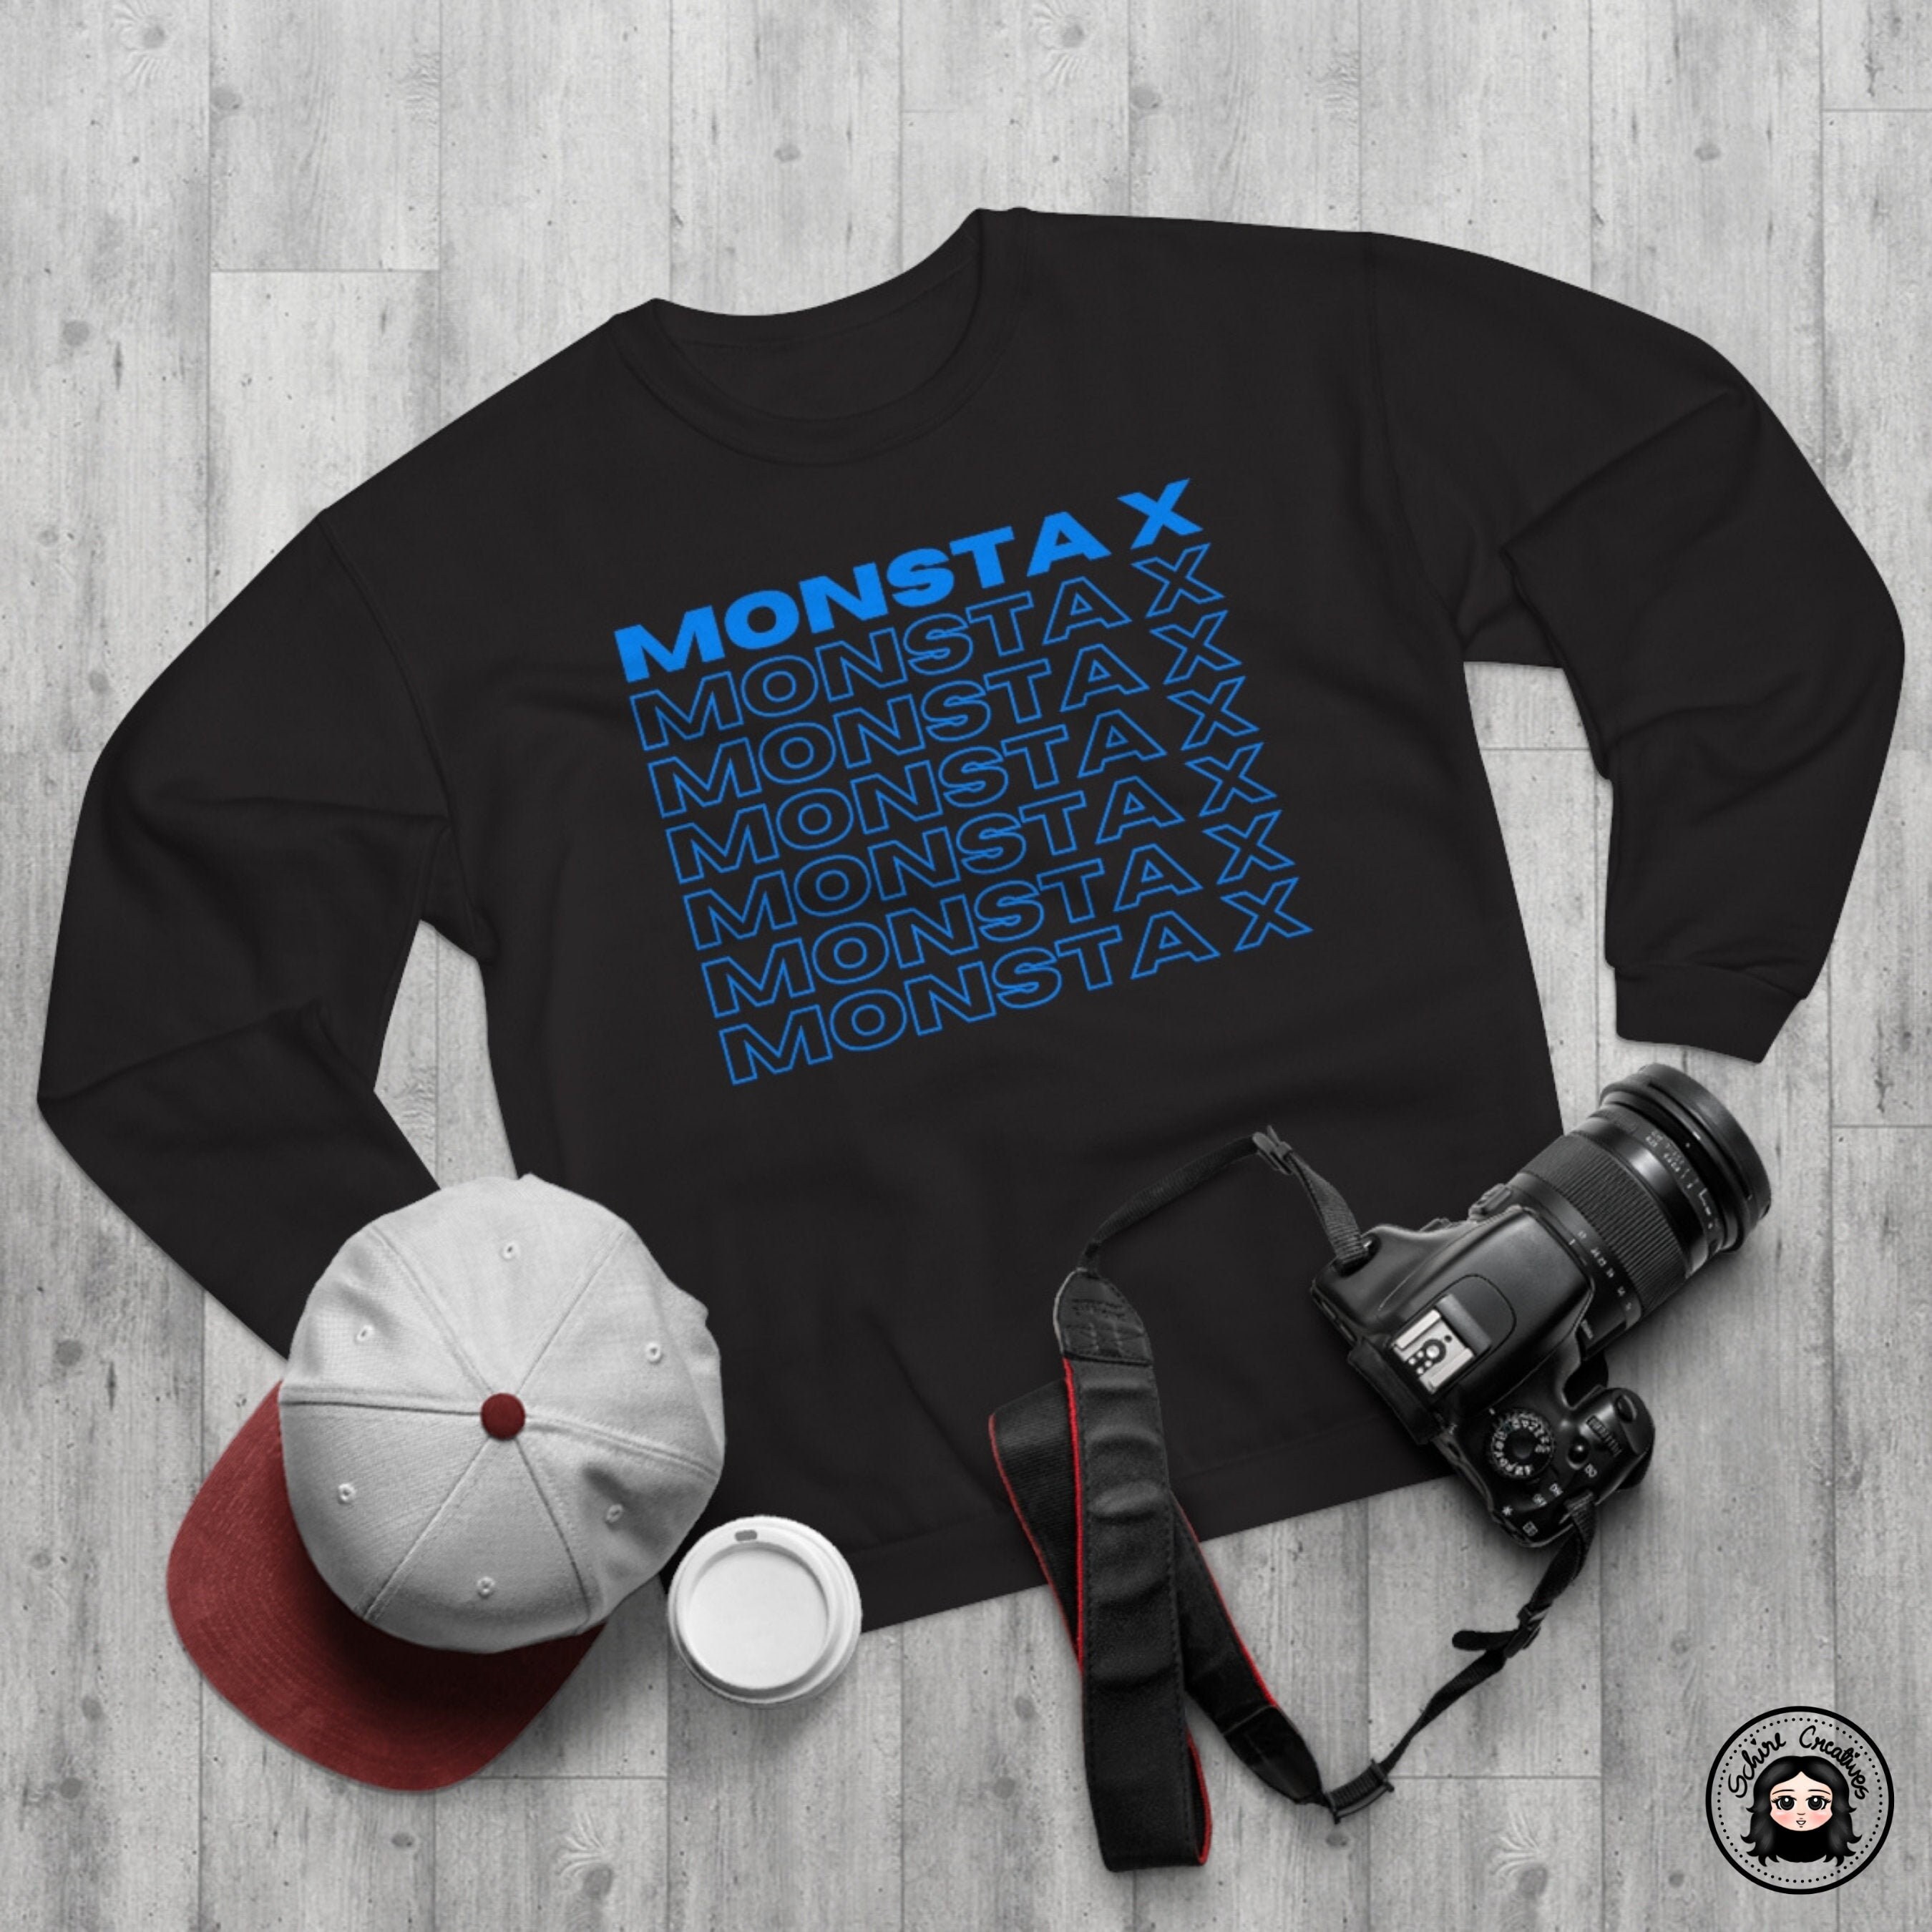 Update: MONSTA X Shares Sneak Peek Of Upcoming Album “Fatal Love”